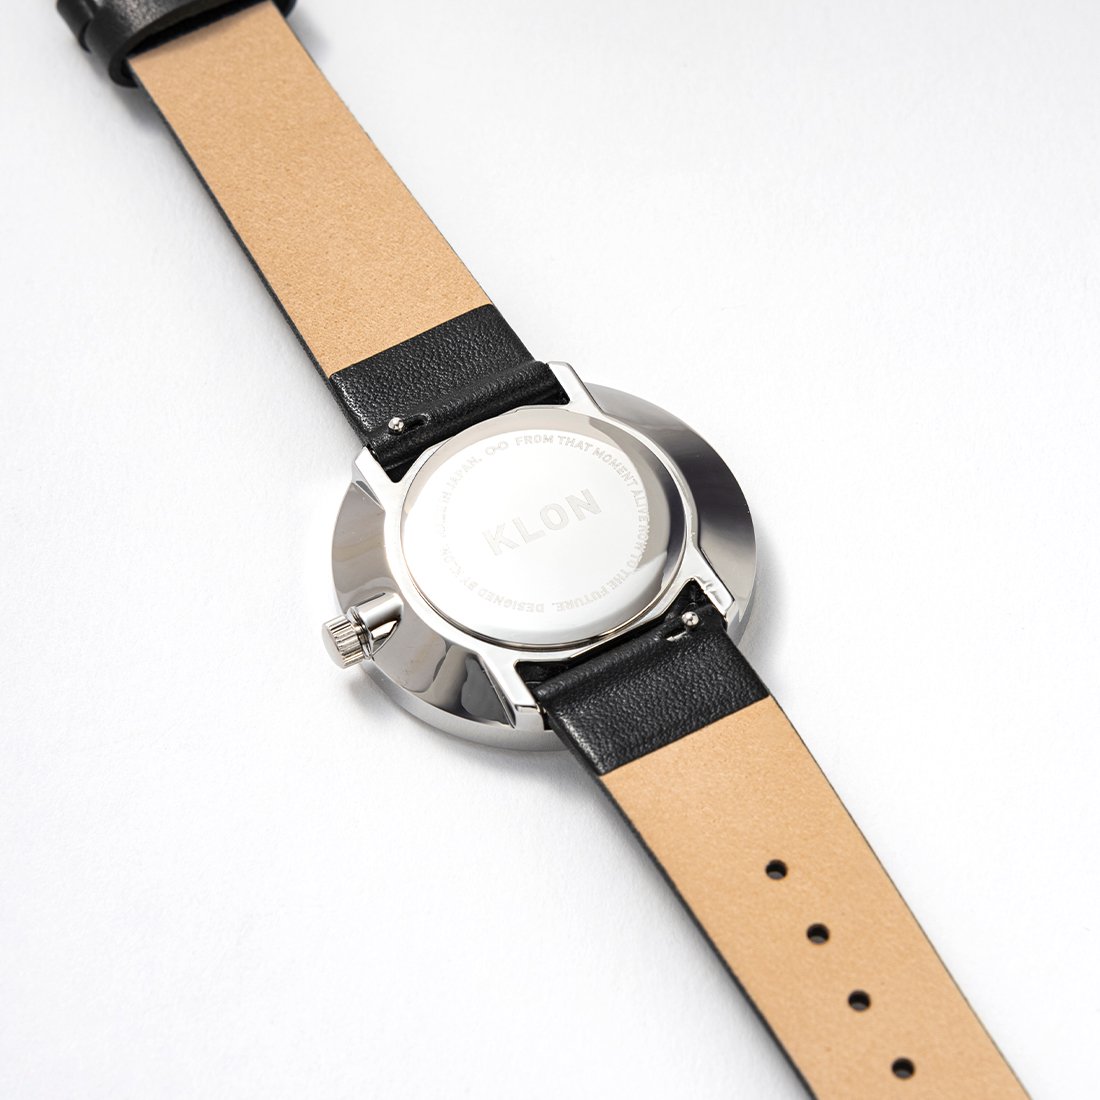 KLON MOCK NUMBER [38/W-FACE/B-BELT] カジュアル 腕時計